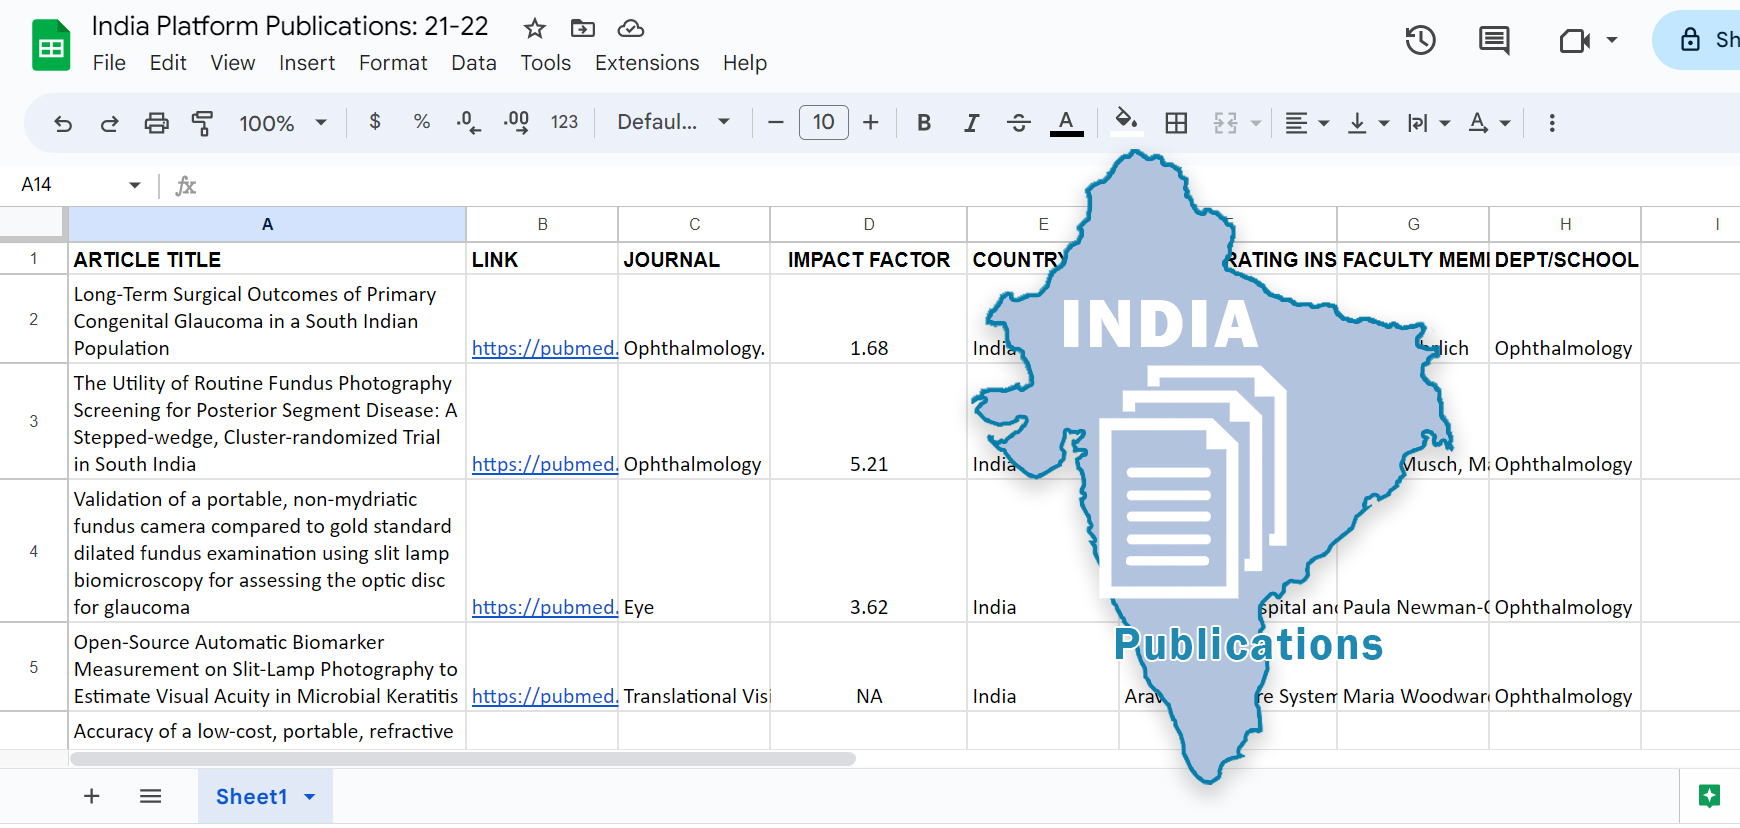 India Publications Graphic